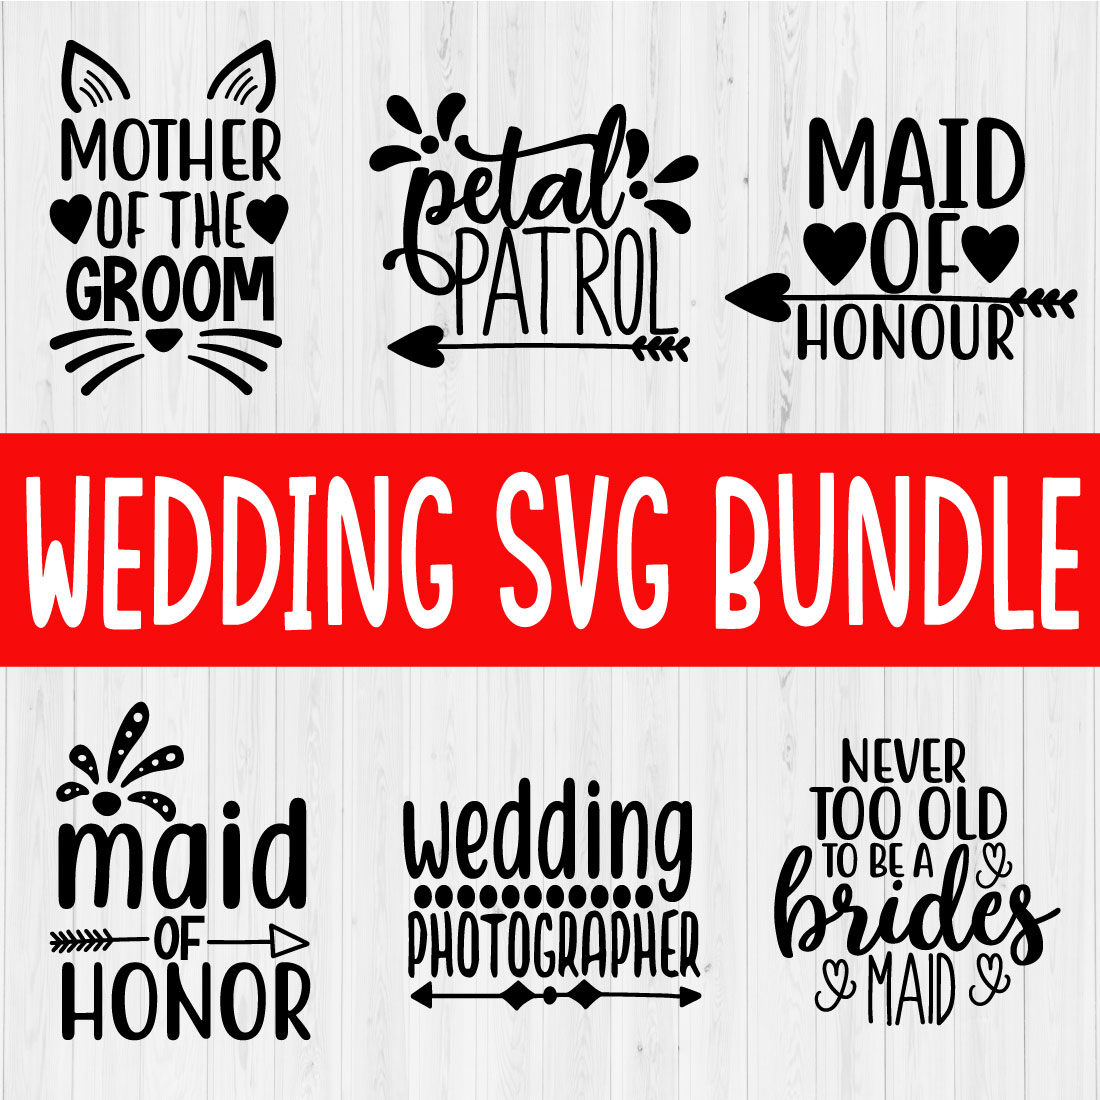 Wedding Svg Bundle Vol12 cover image.